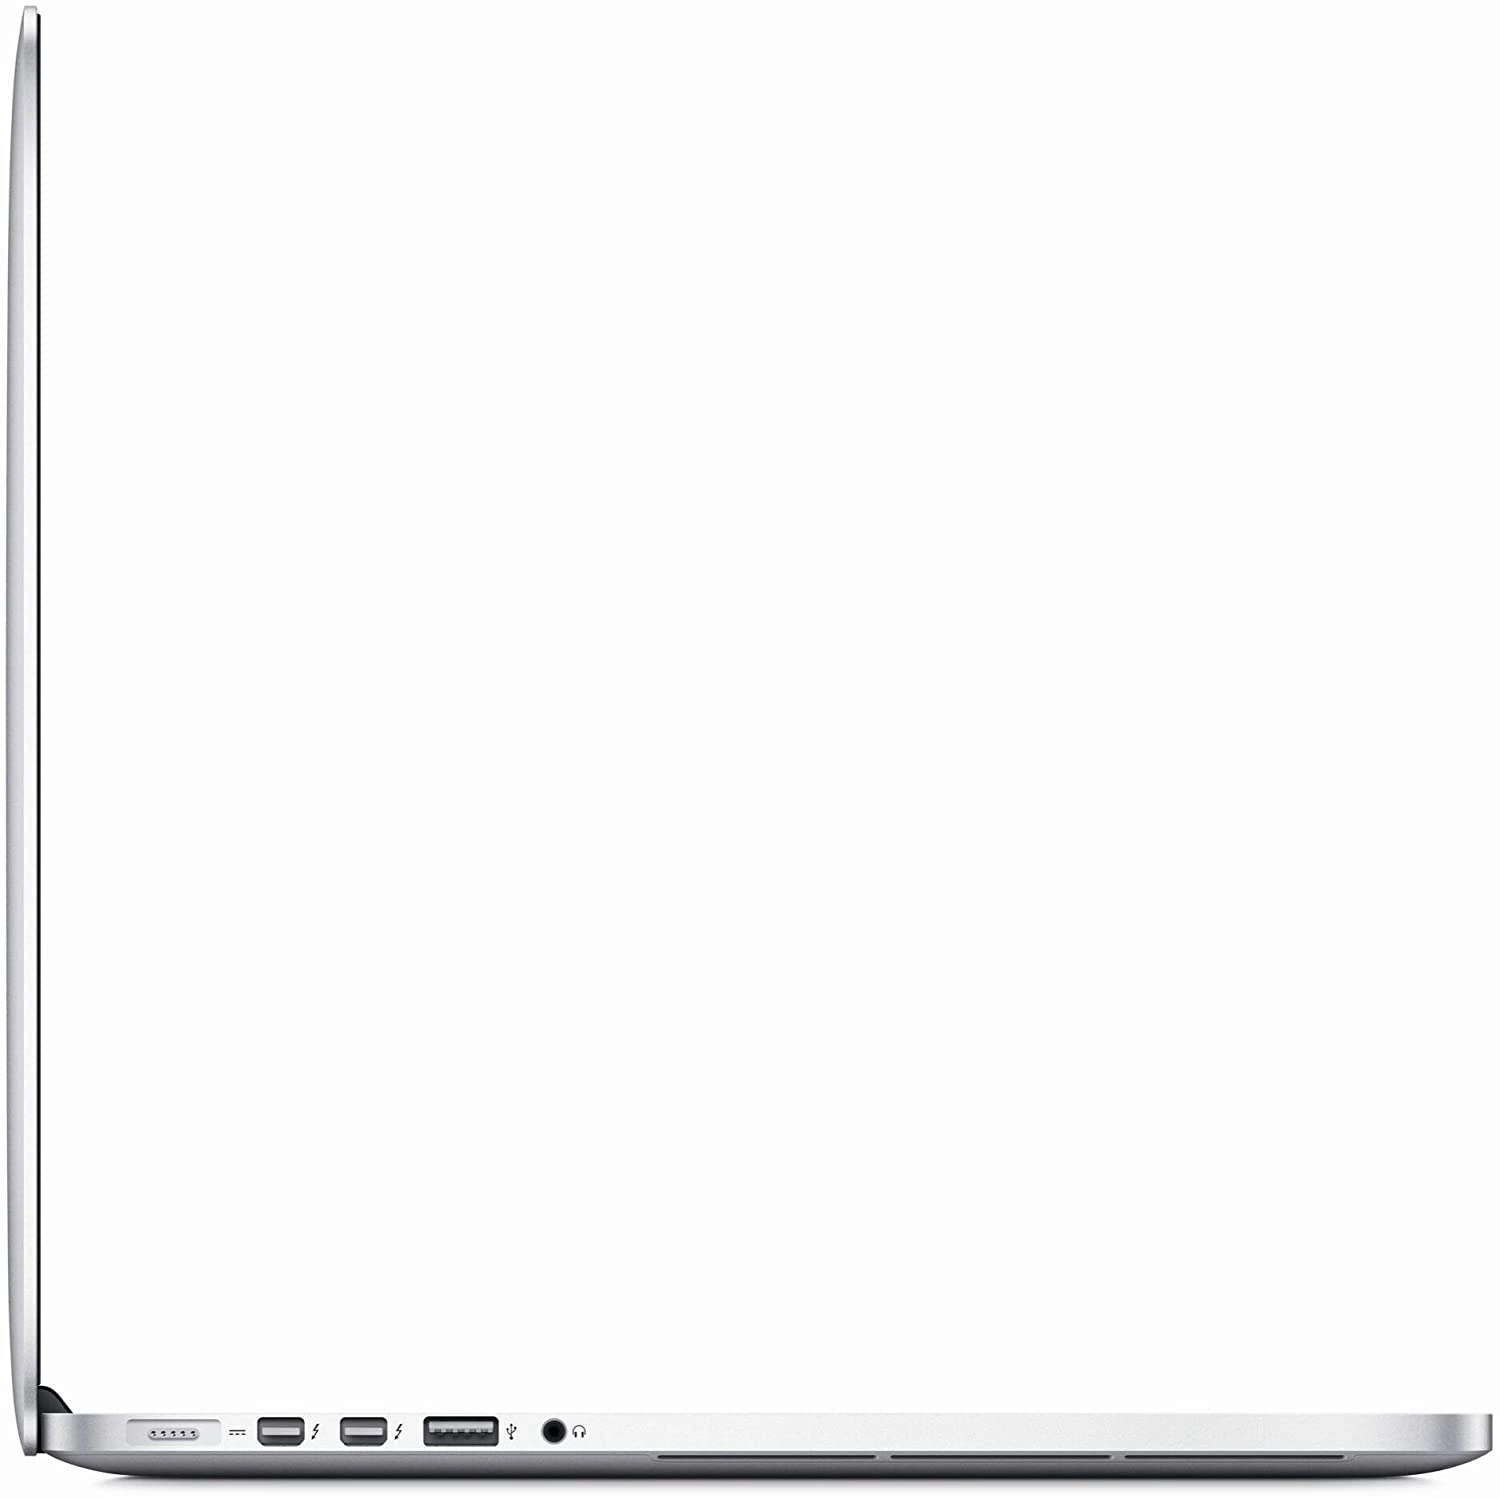 Apple MacBook Pro laptop image